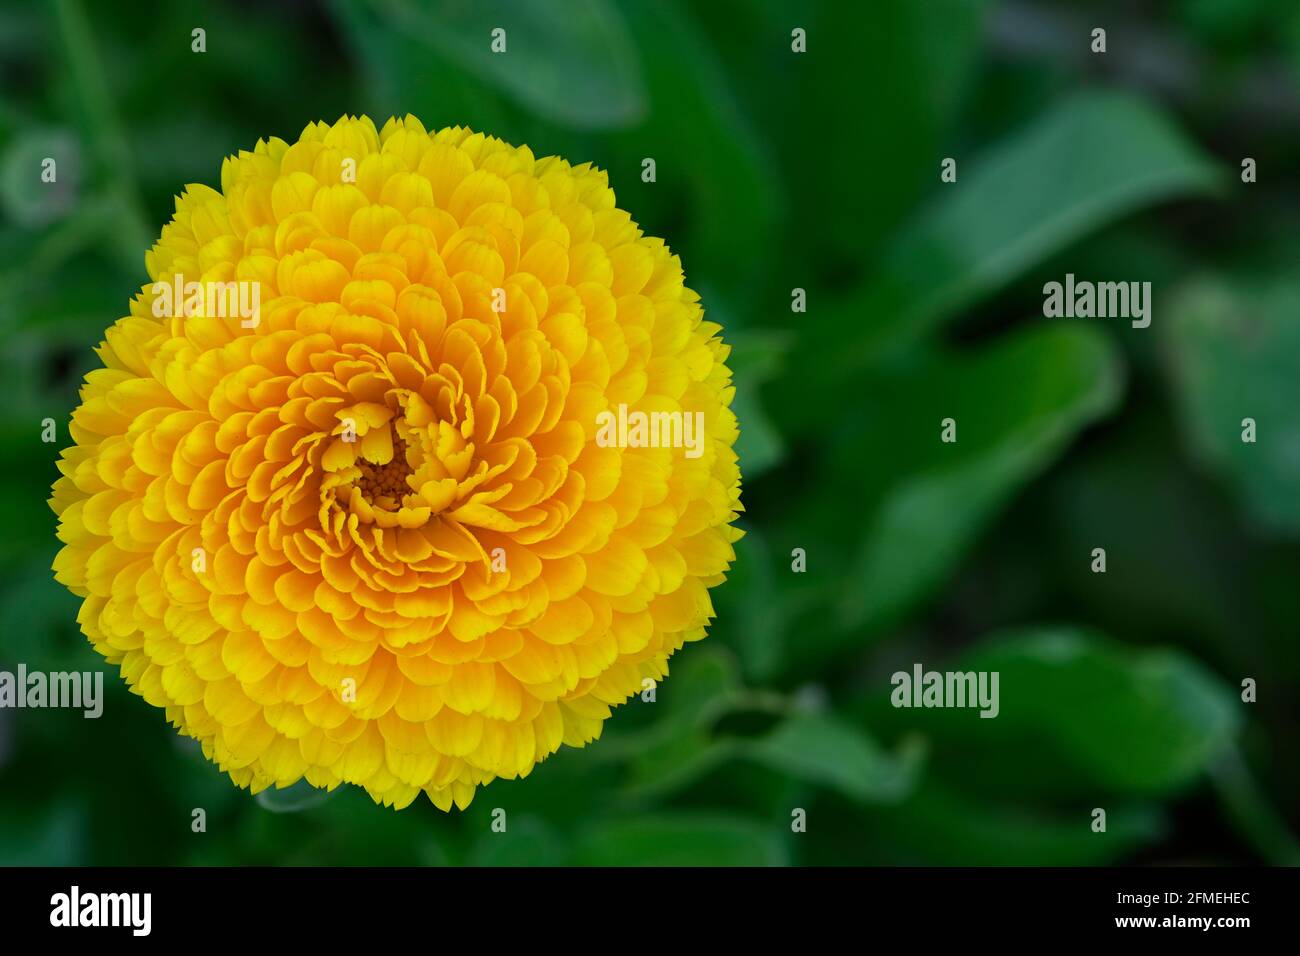 Closeup of garden grown yellow, double for Calendula flower in garden. Negative space RHS of frame. Stock Photo